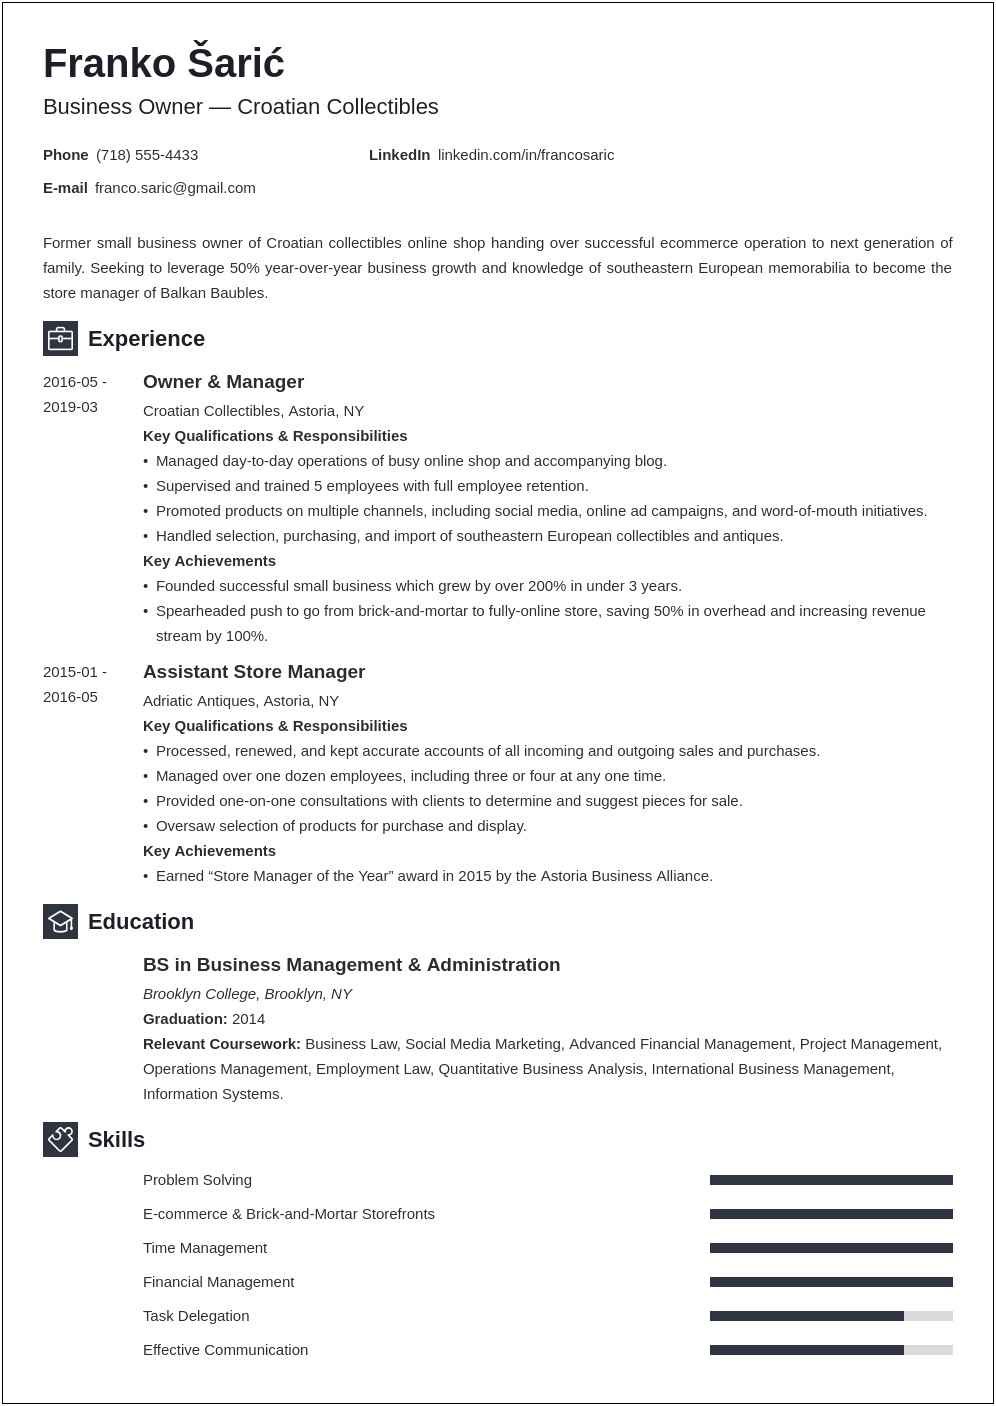 Resume Job Description For Small Business Owner